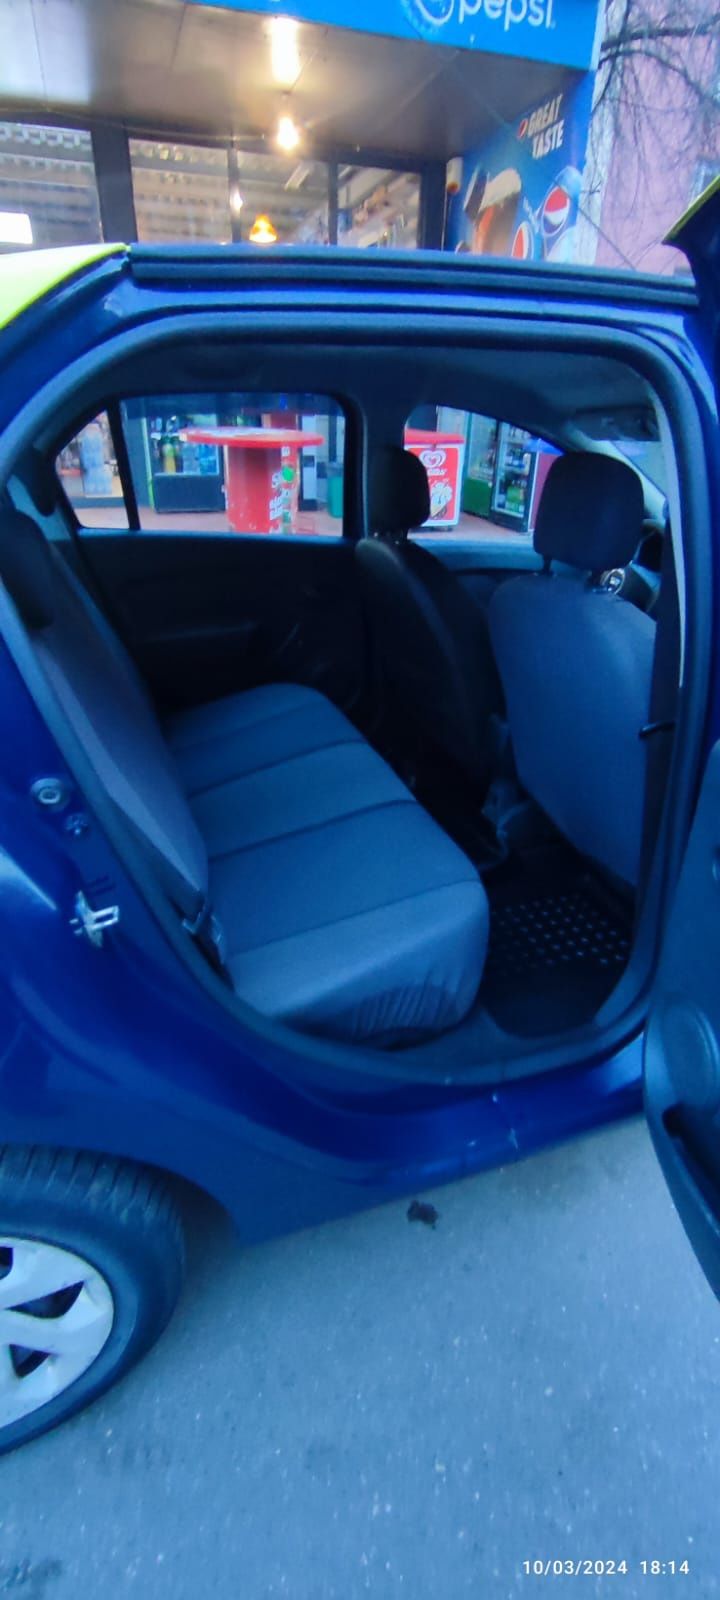 Vând autoturism marca Dacia logan